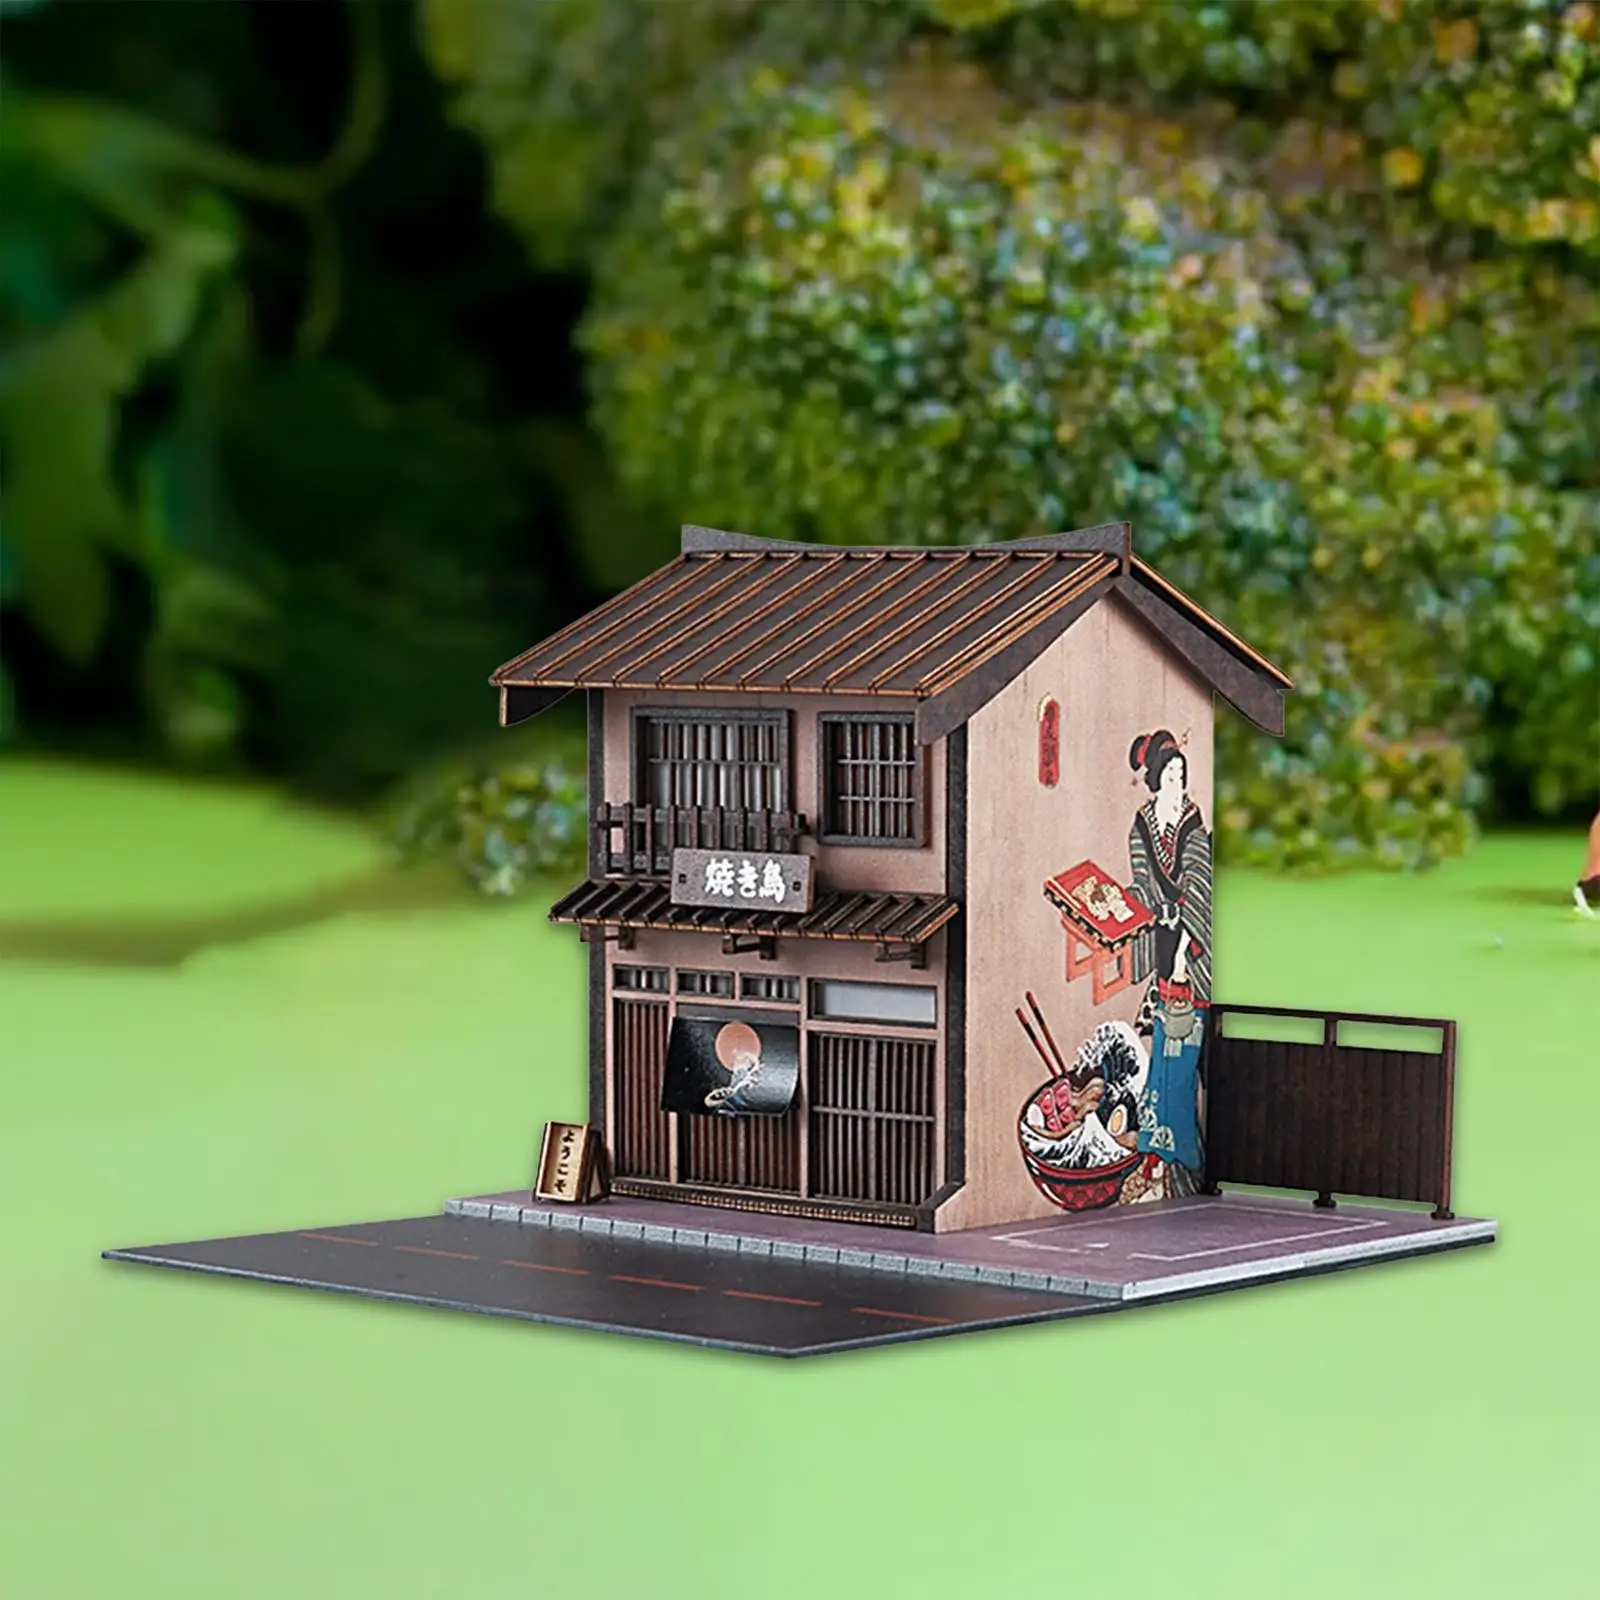 1/64 Shop Model Diorama Making Kits DIY for DIY Scene Model Street Building